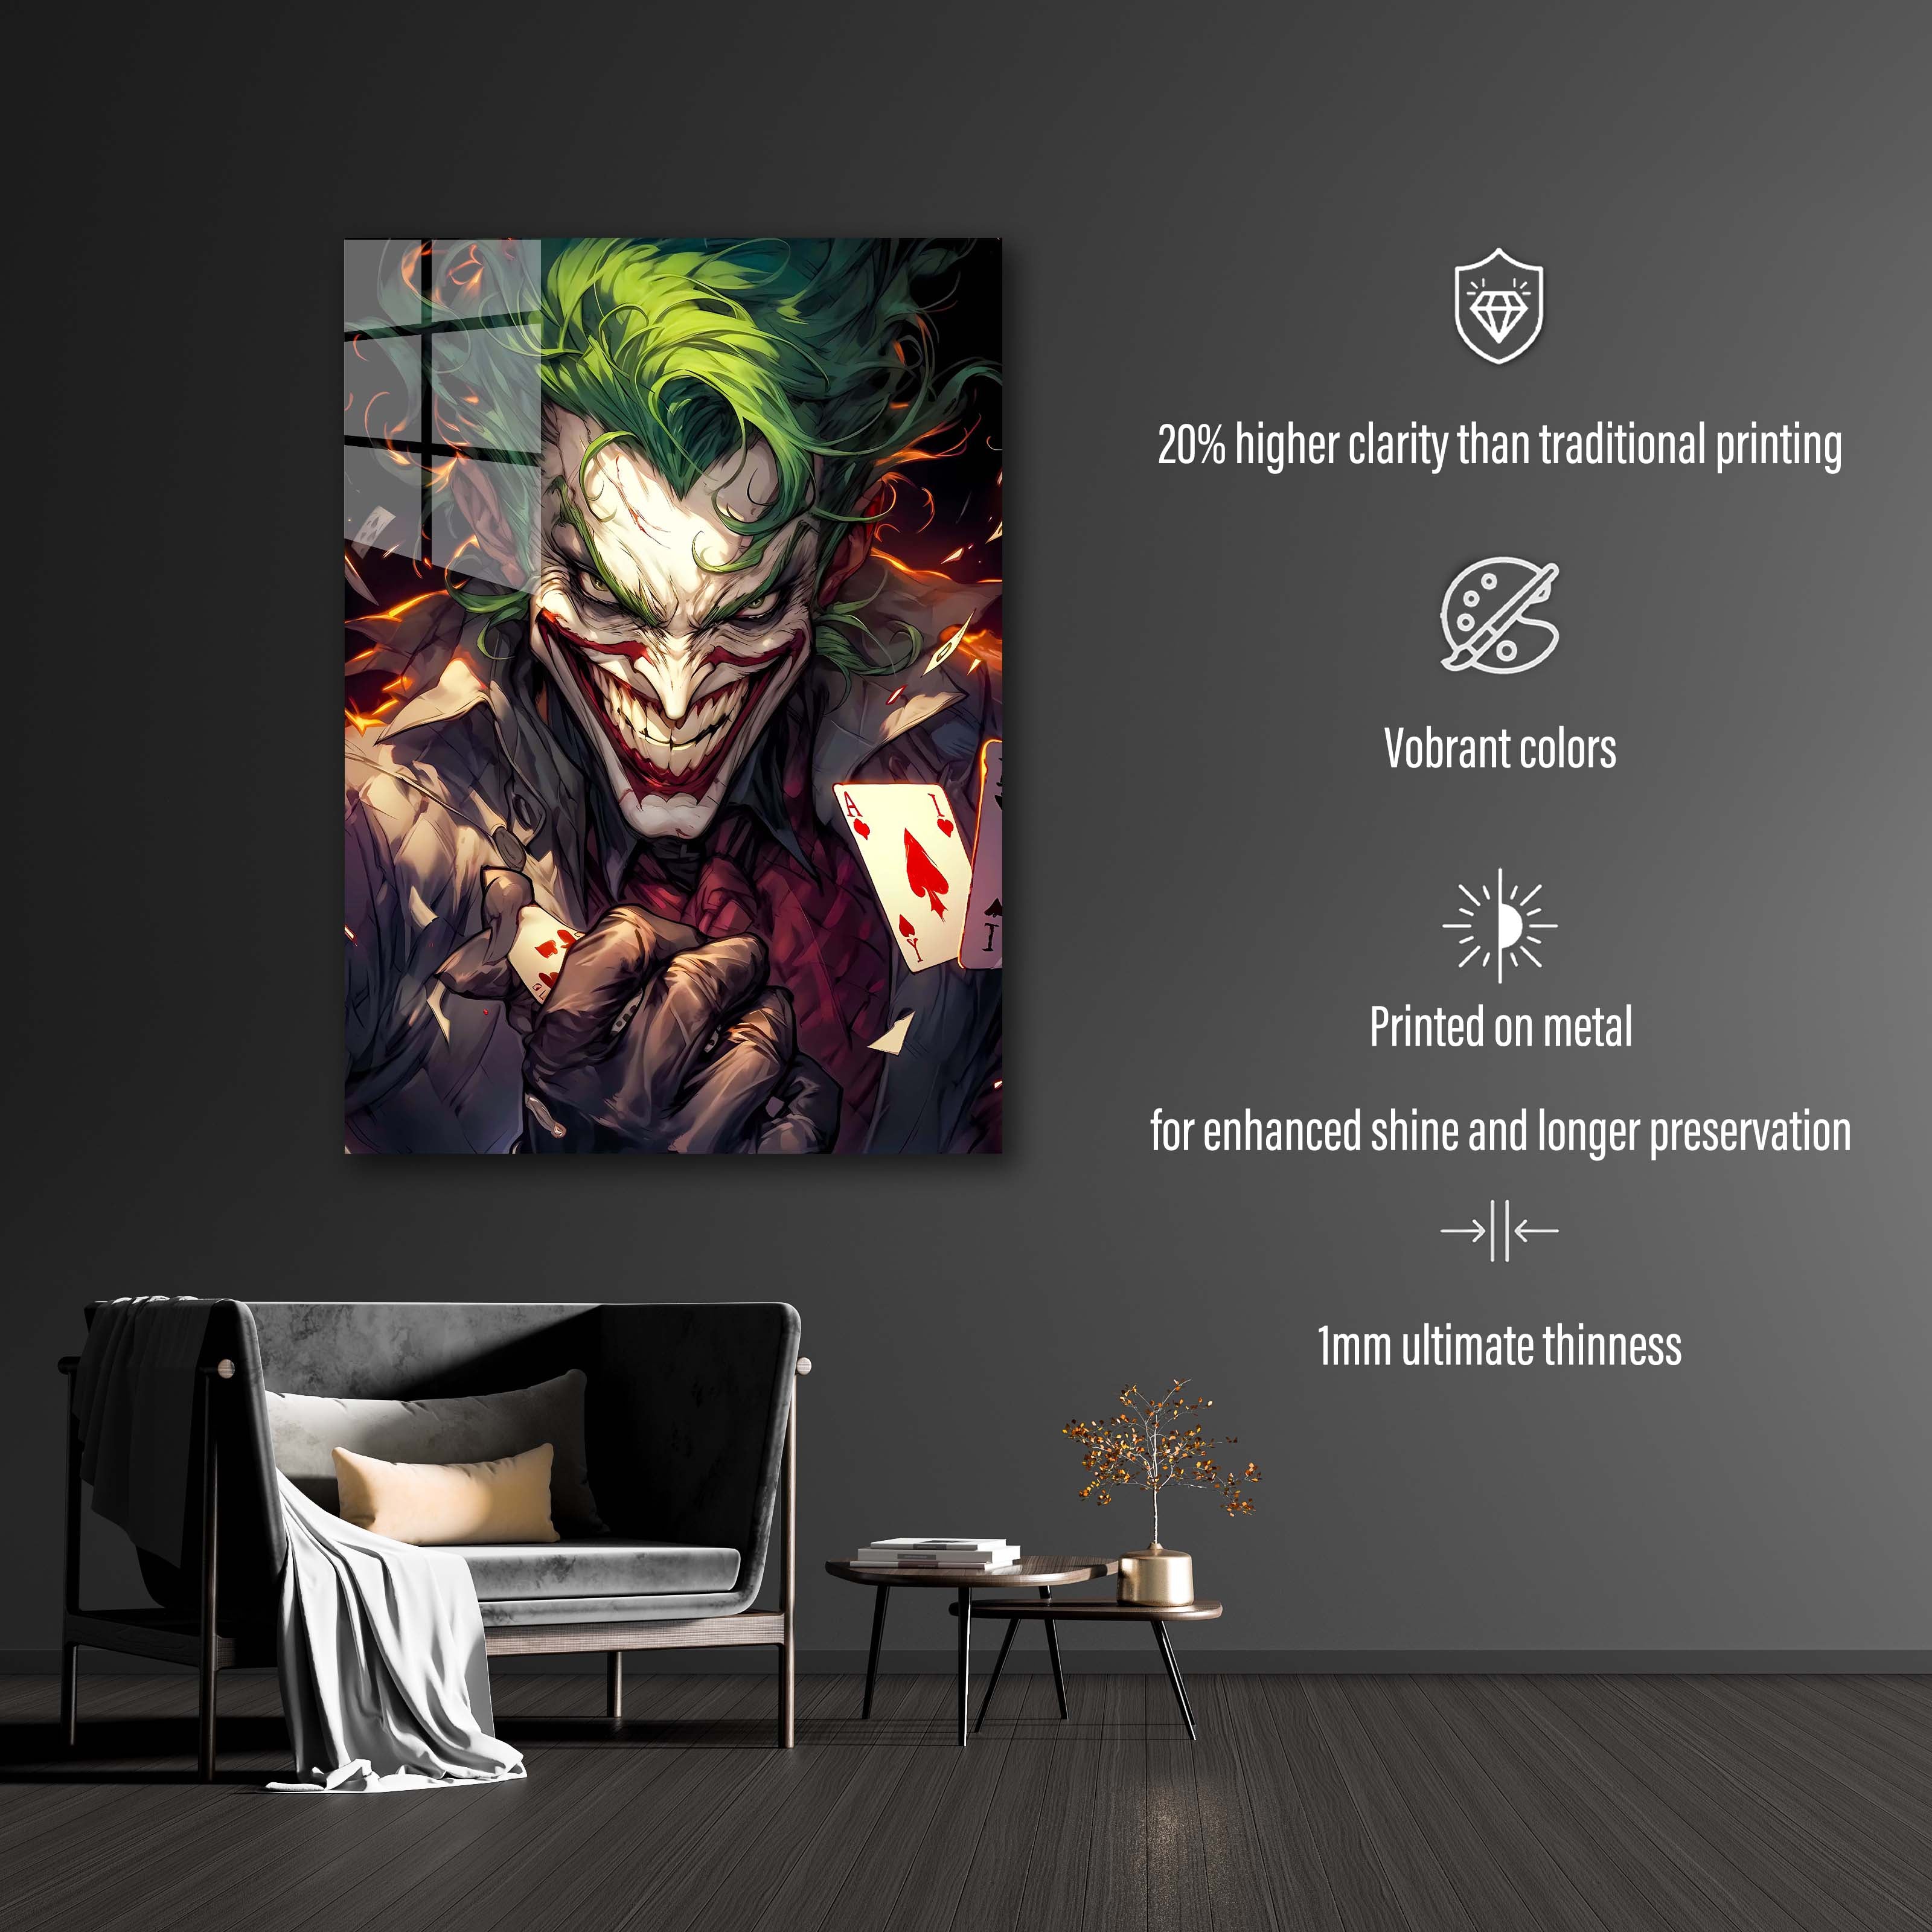 Joker03-designed by @MarianaMA